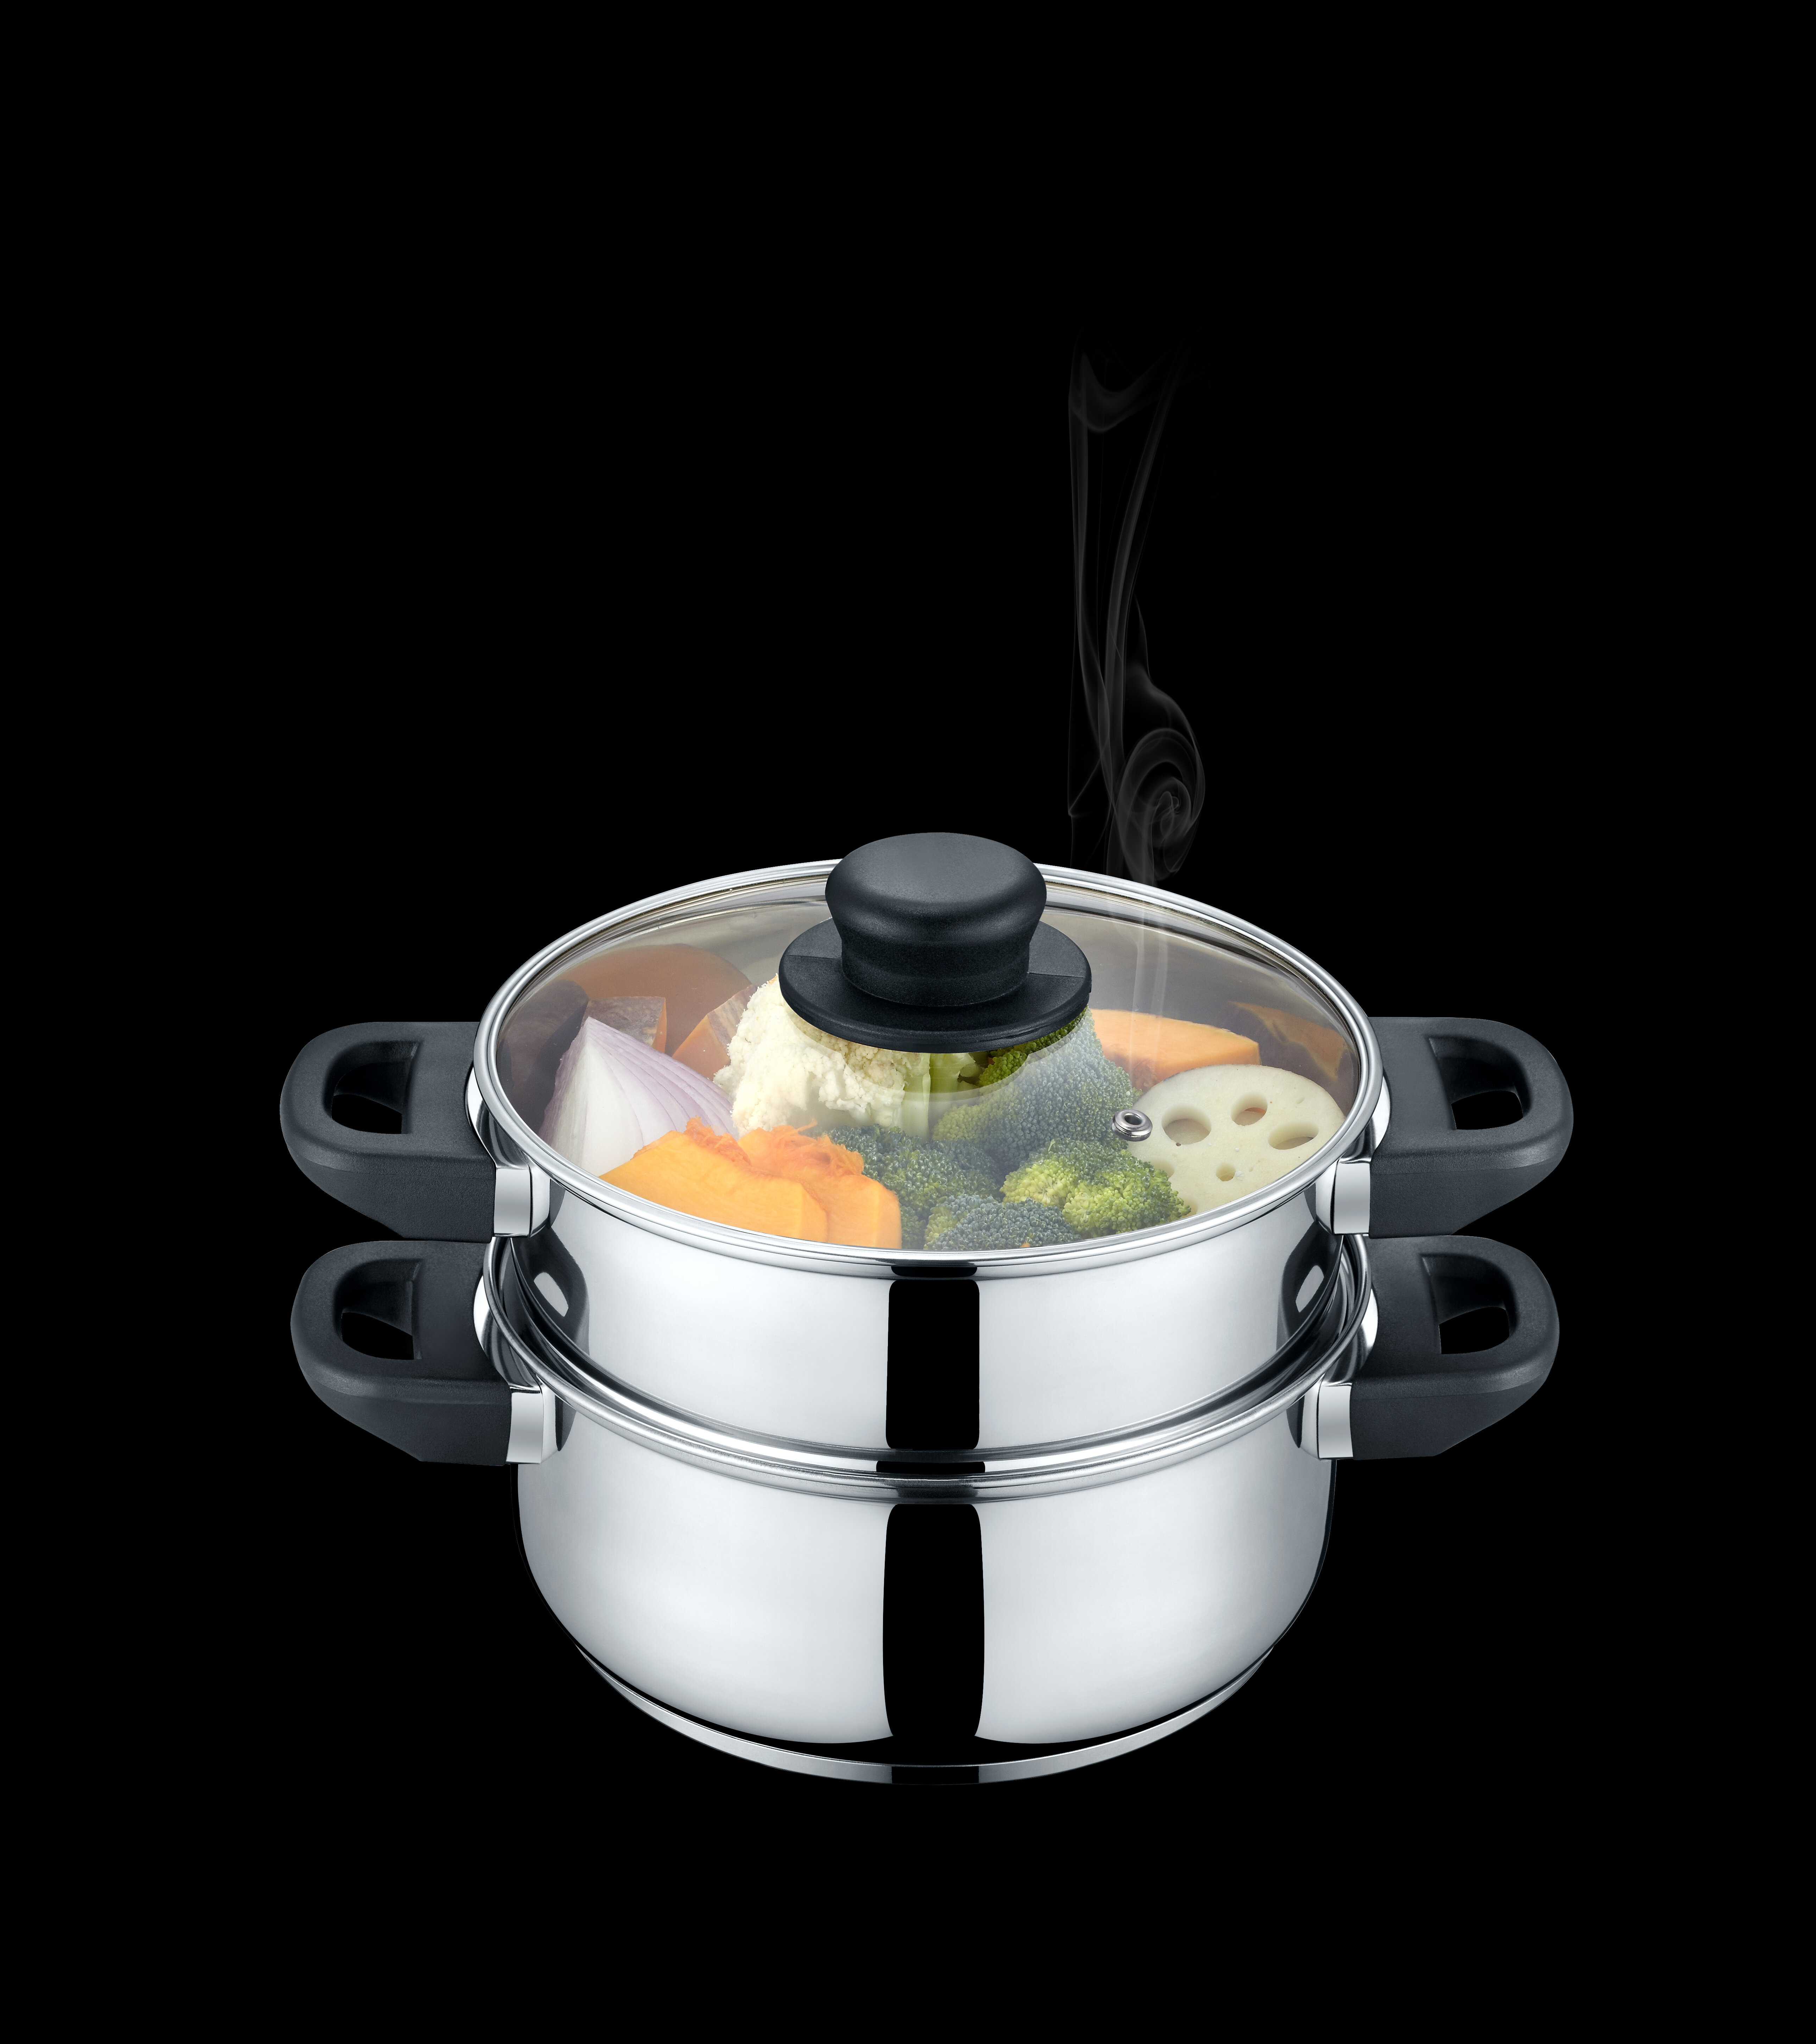 Cucina 3-Quart Covered Steamer Set